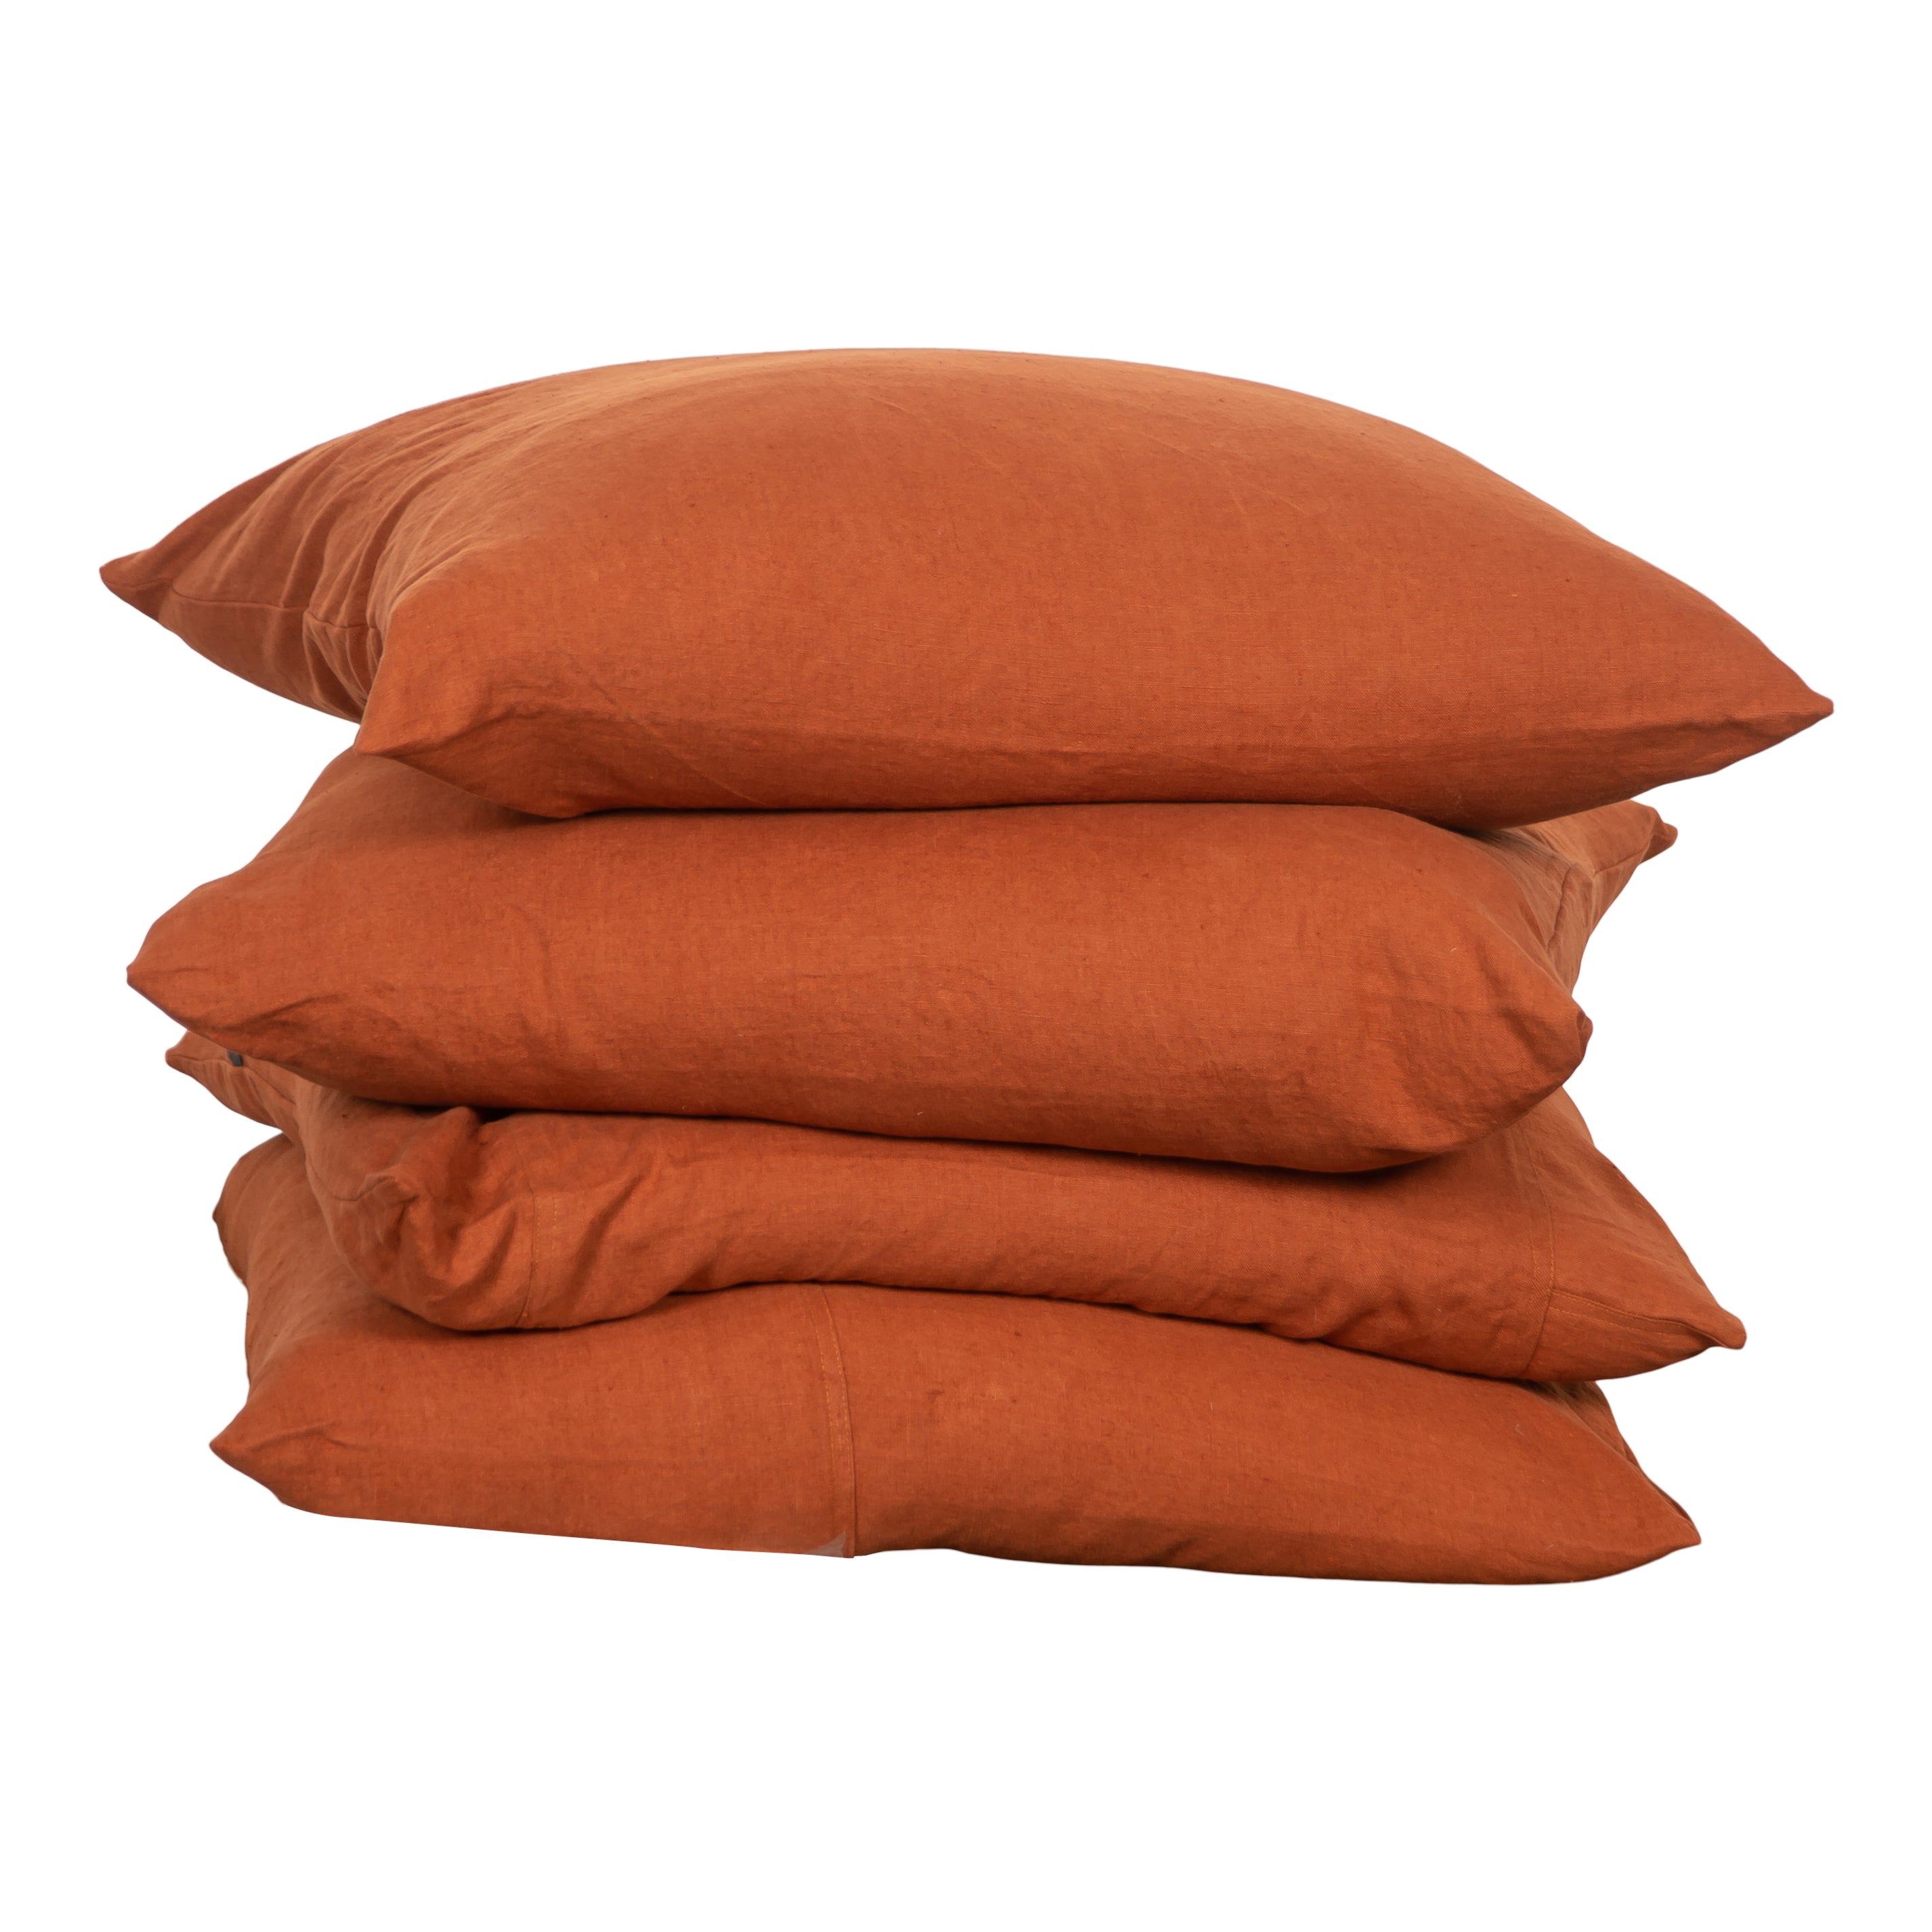 Ryden Blood Orange Cushion